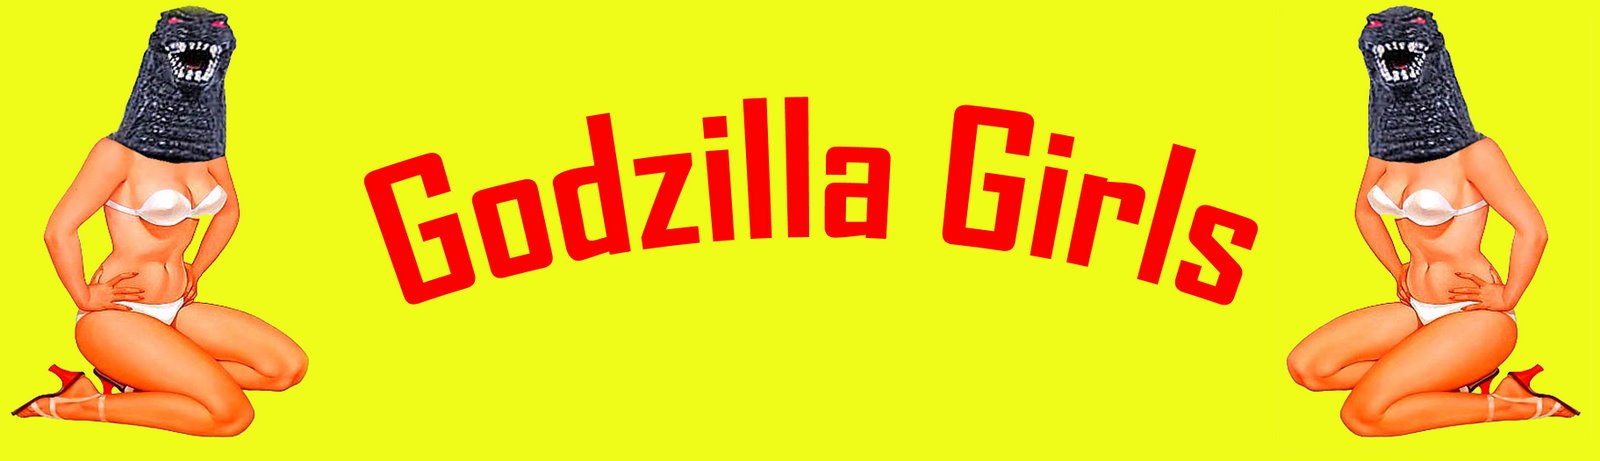 Godzilla Girls